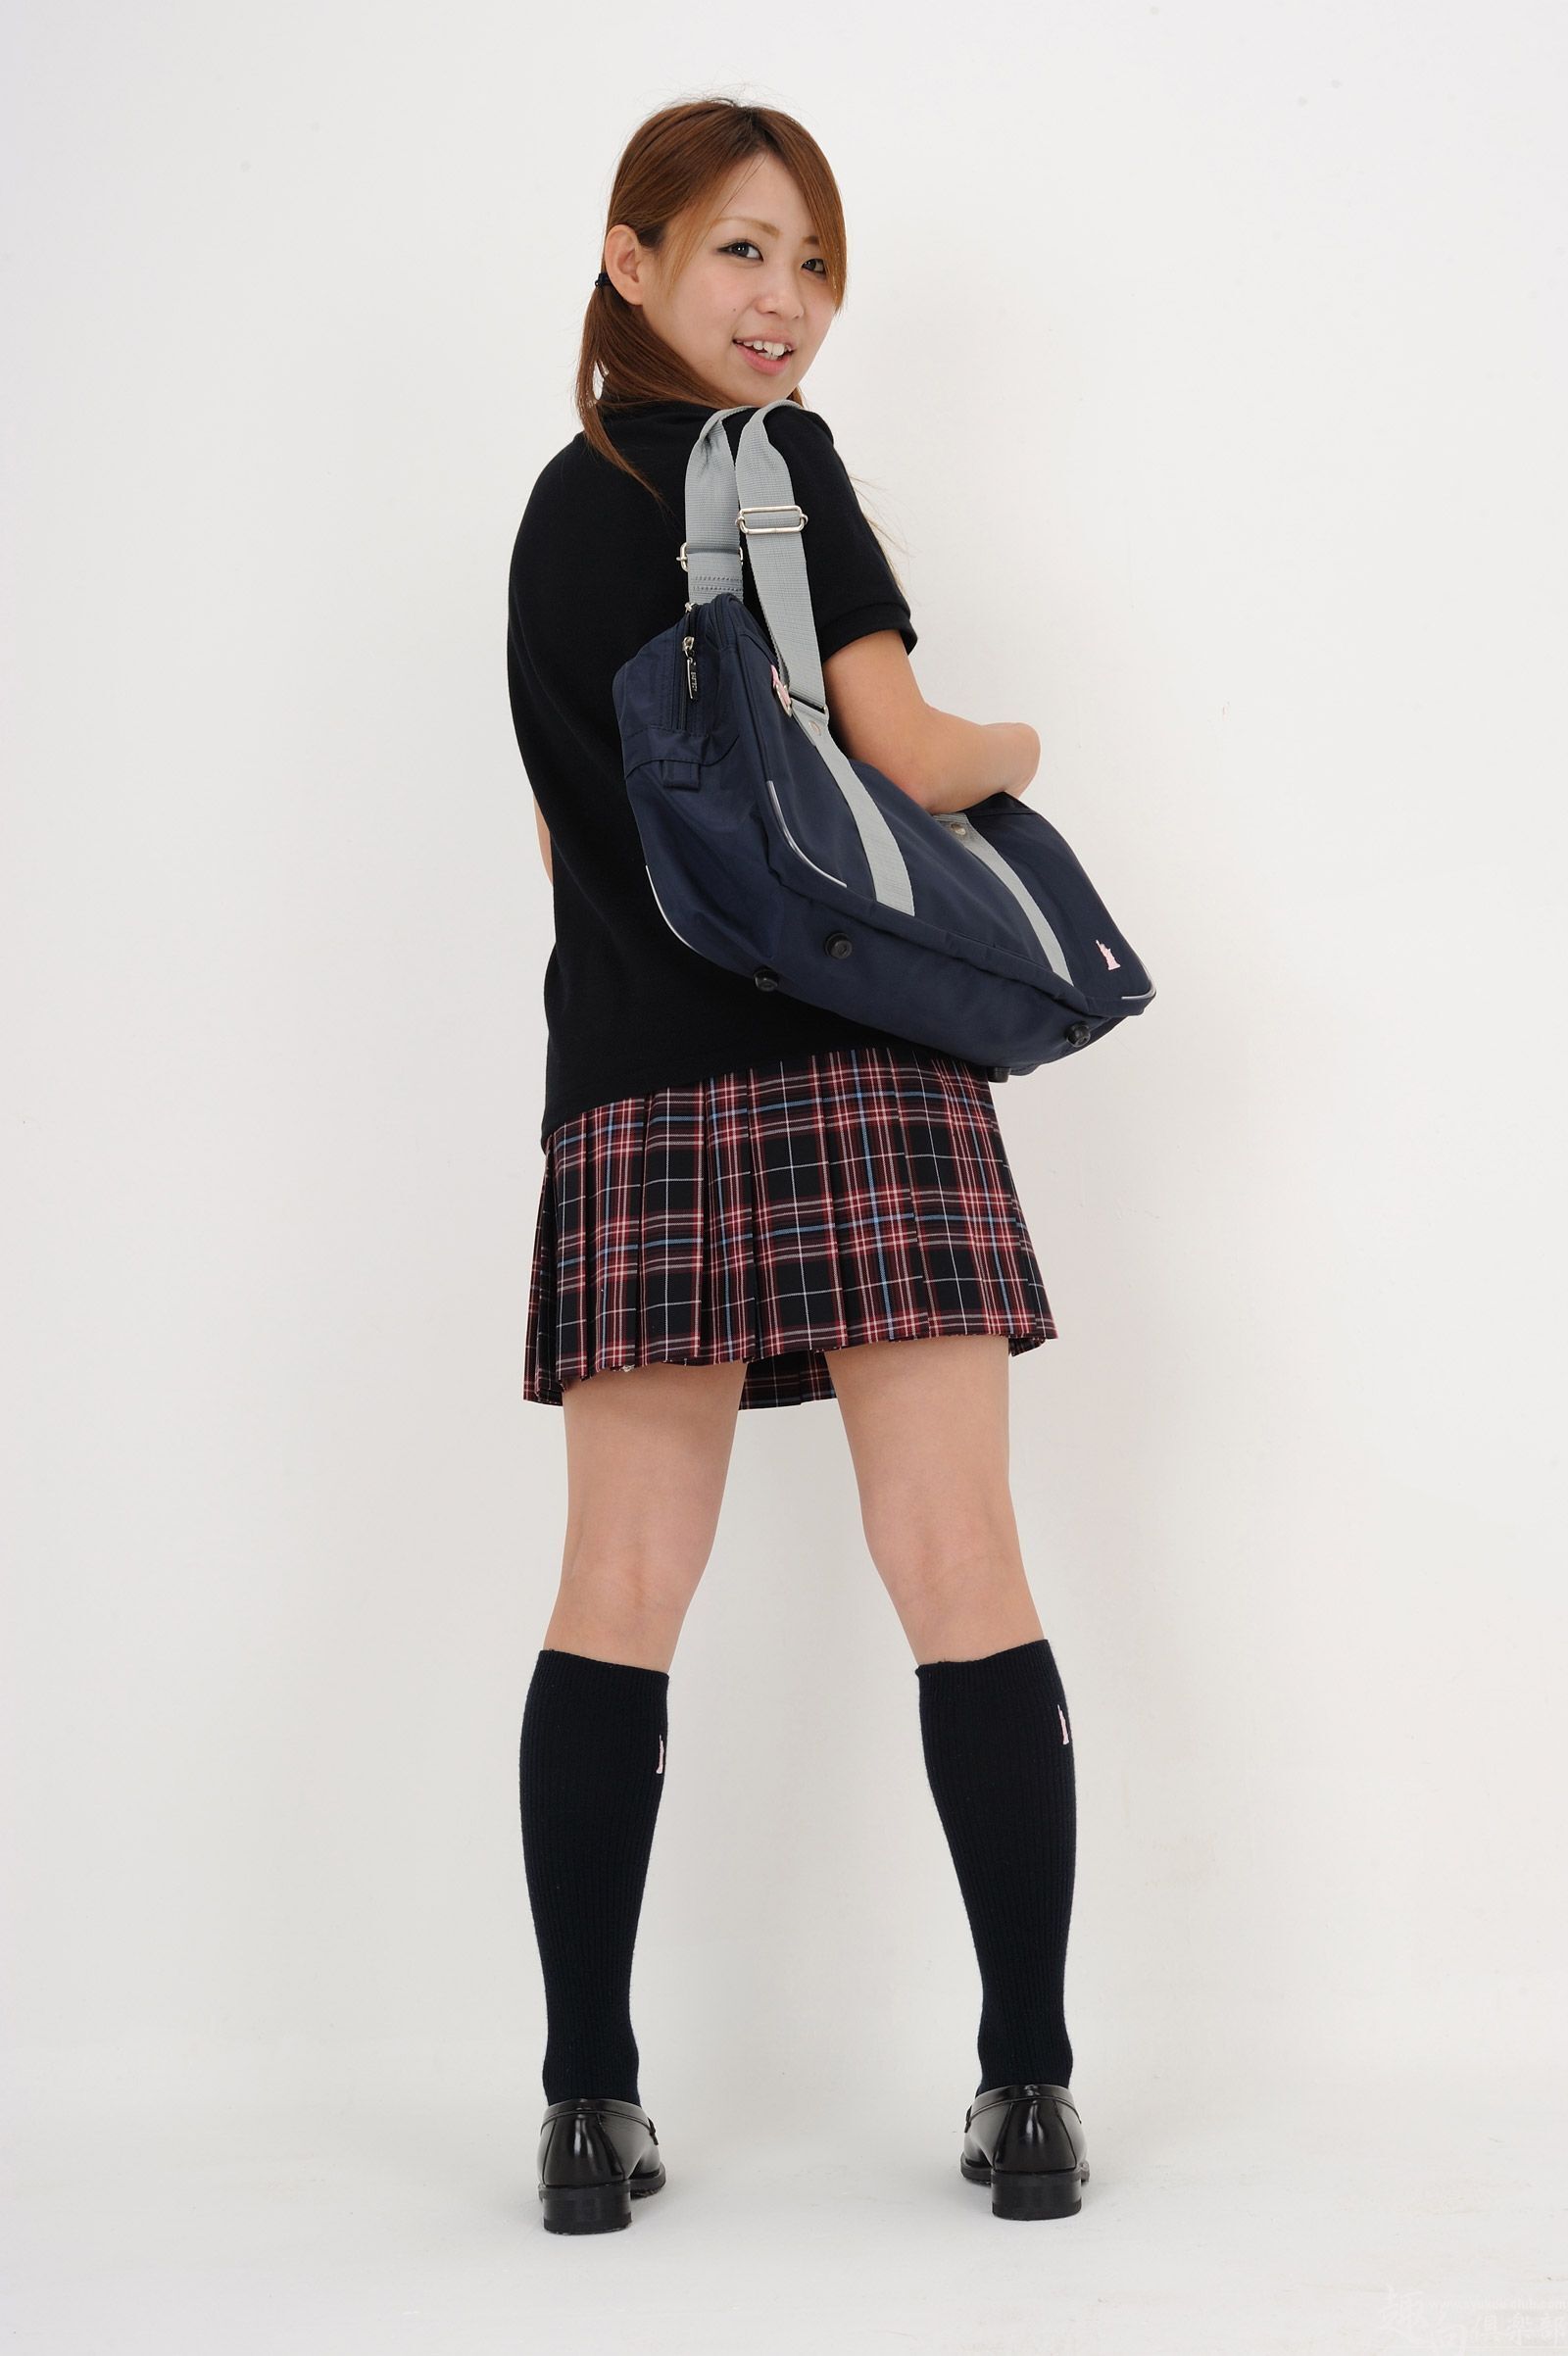 [syukou club] 2012.12.10 uniform Girl 10 cypress Japanese actress sexy silk stockings